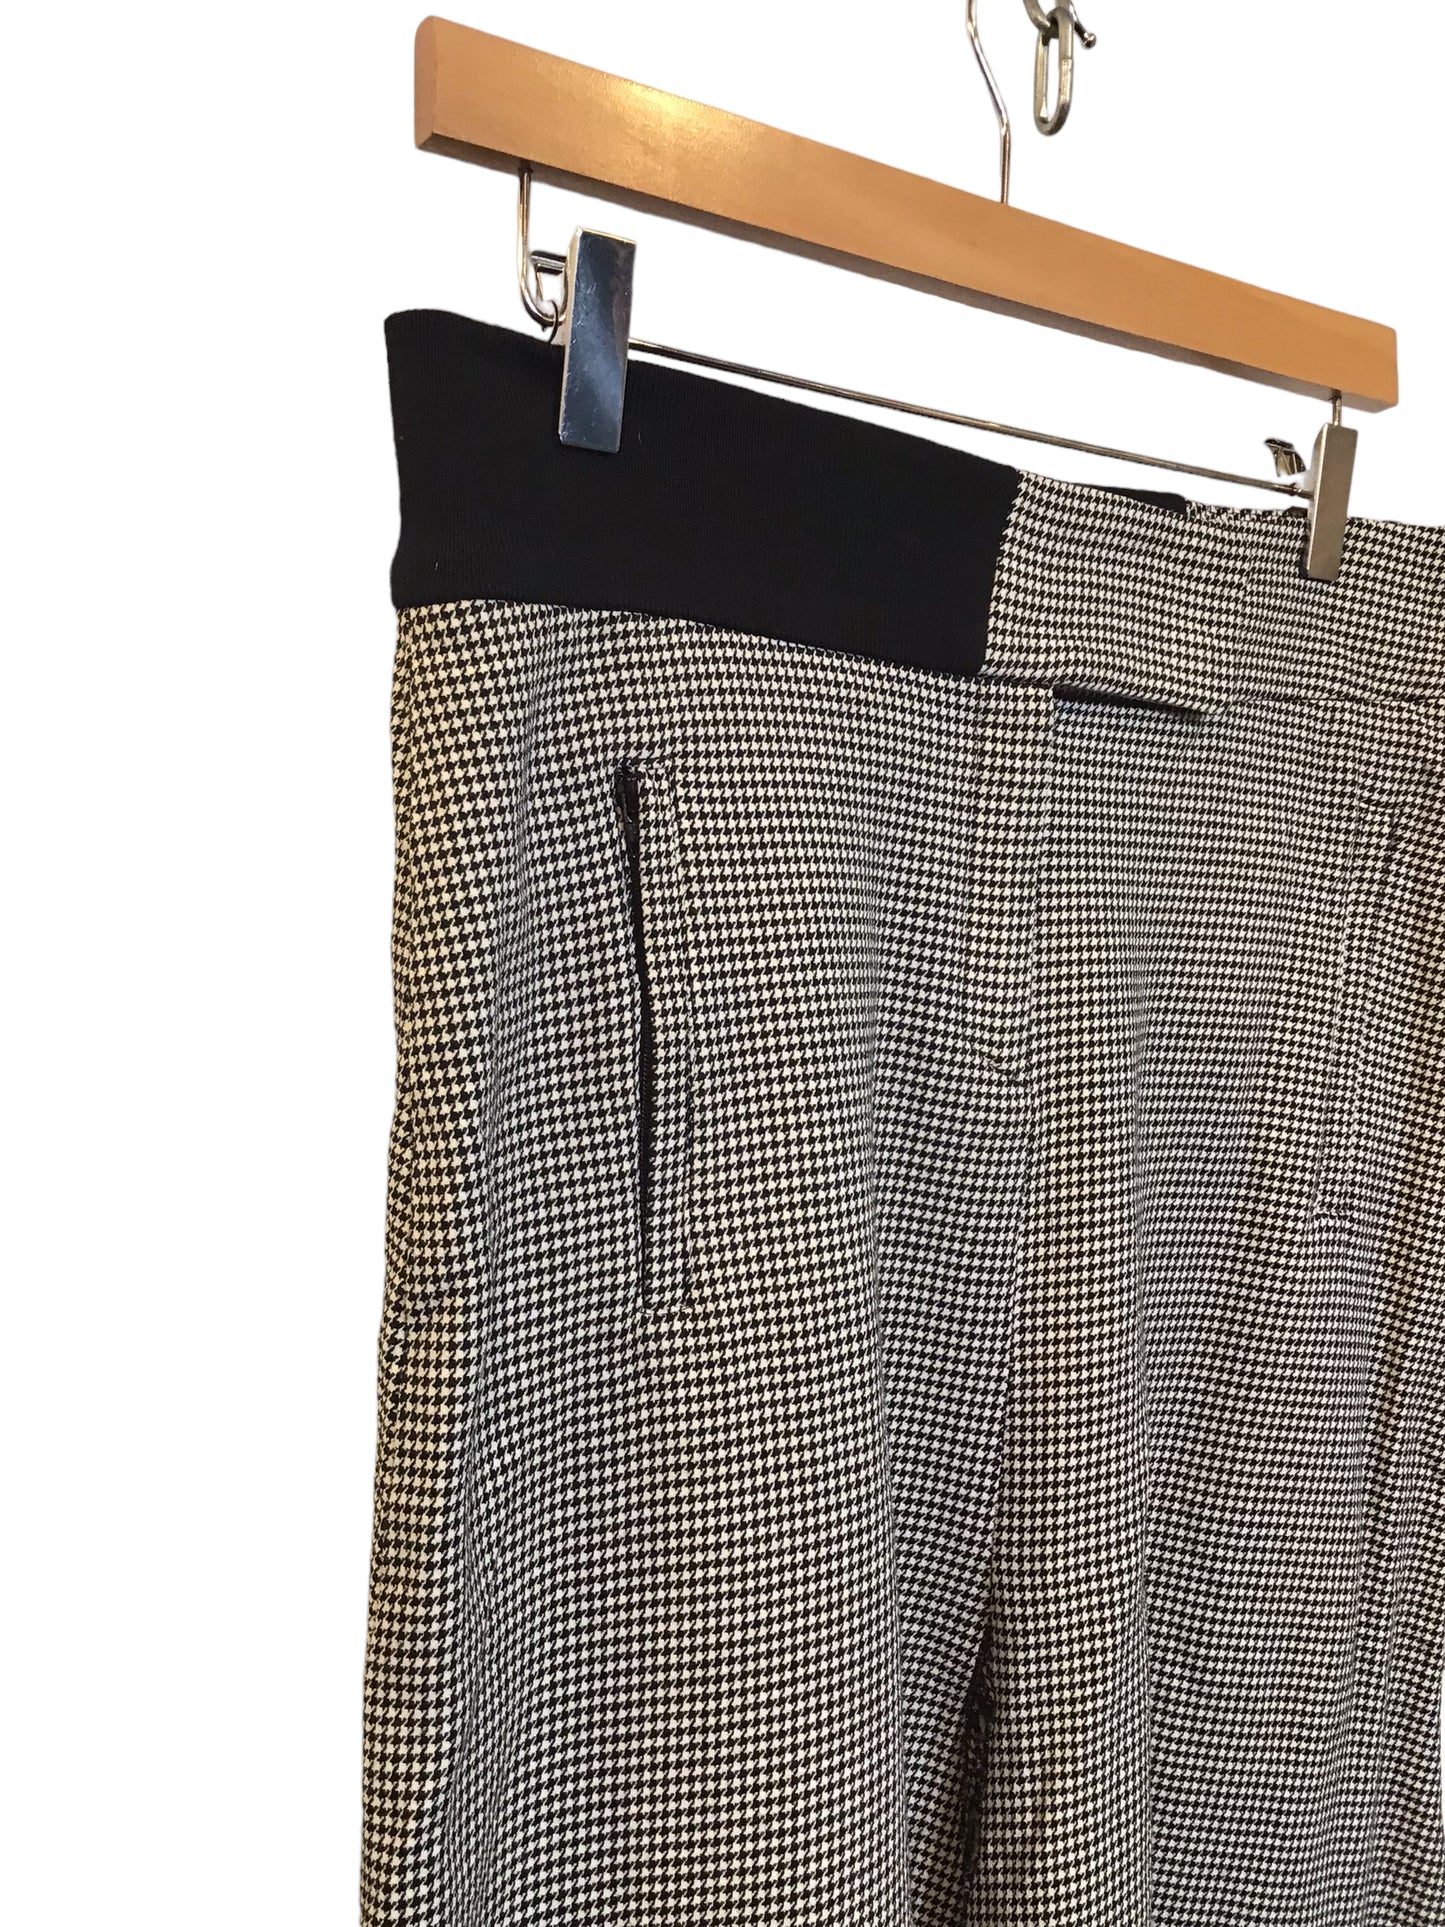 Joseph Checkered Skirt (Size M)